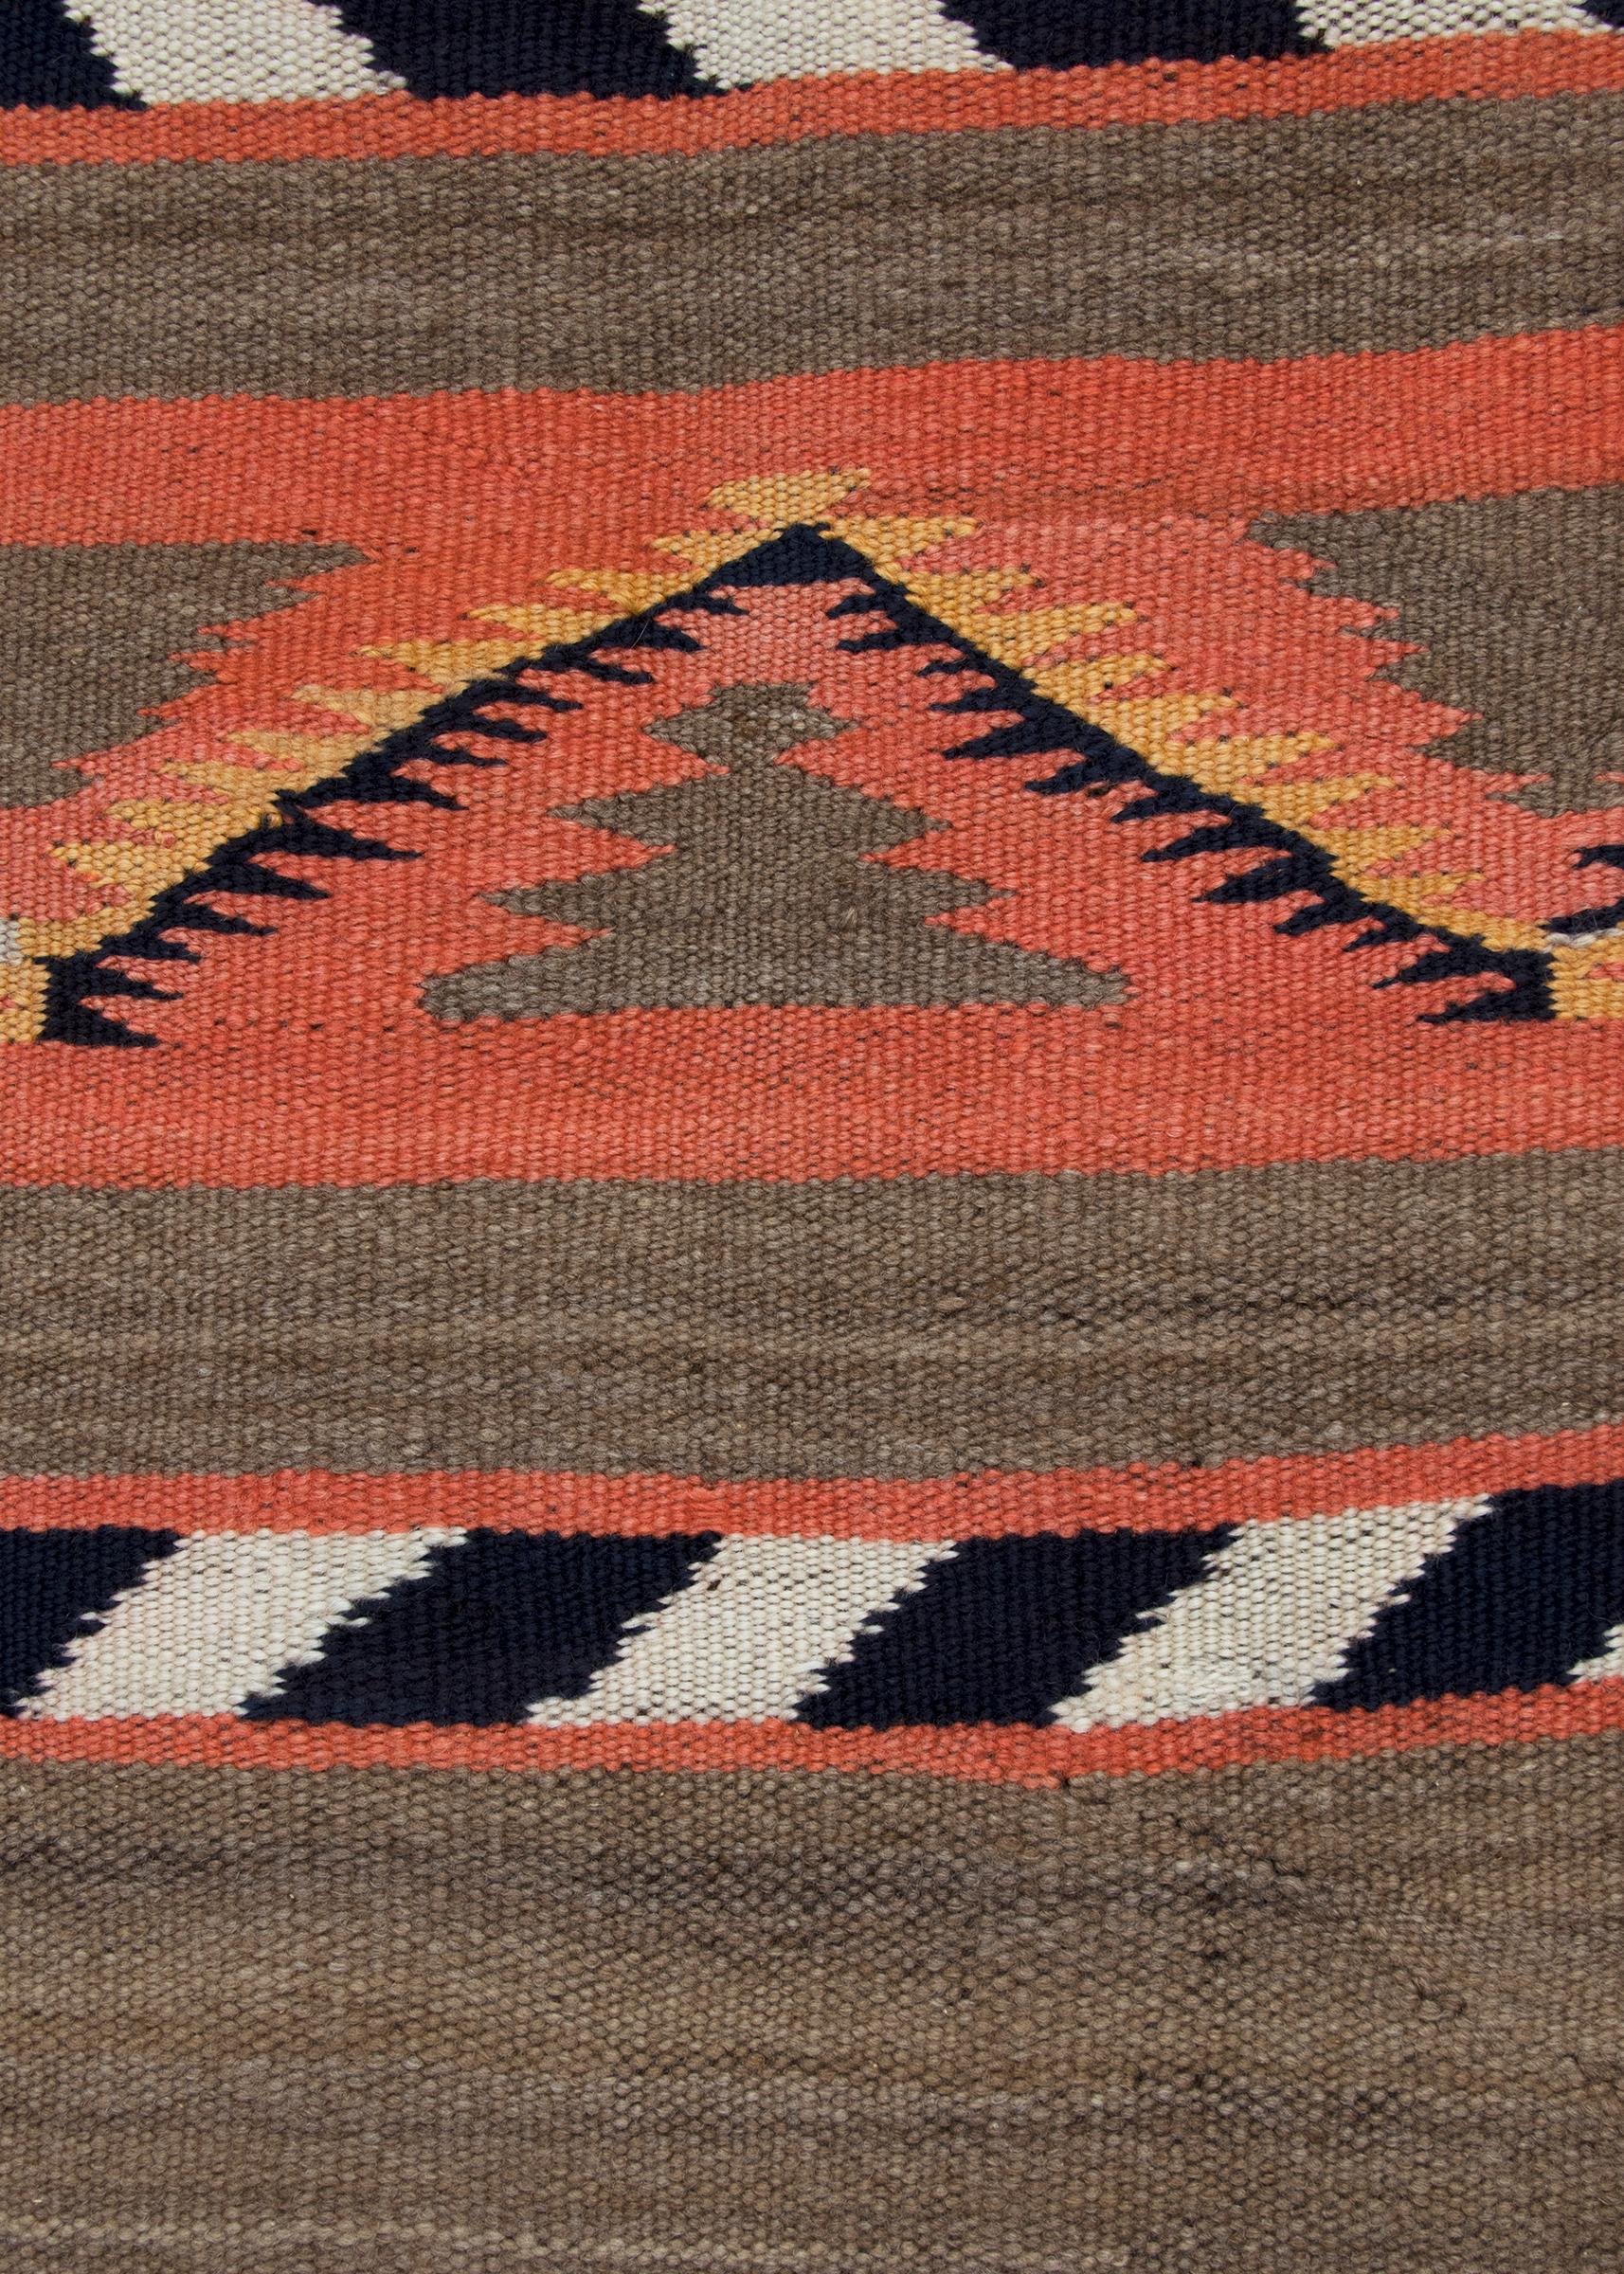 Native American Vintage Navajo Banded Wool Serape Style Blanket, 19th Century, circa 1880-1900